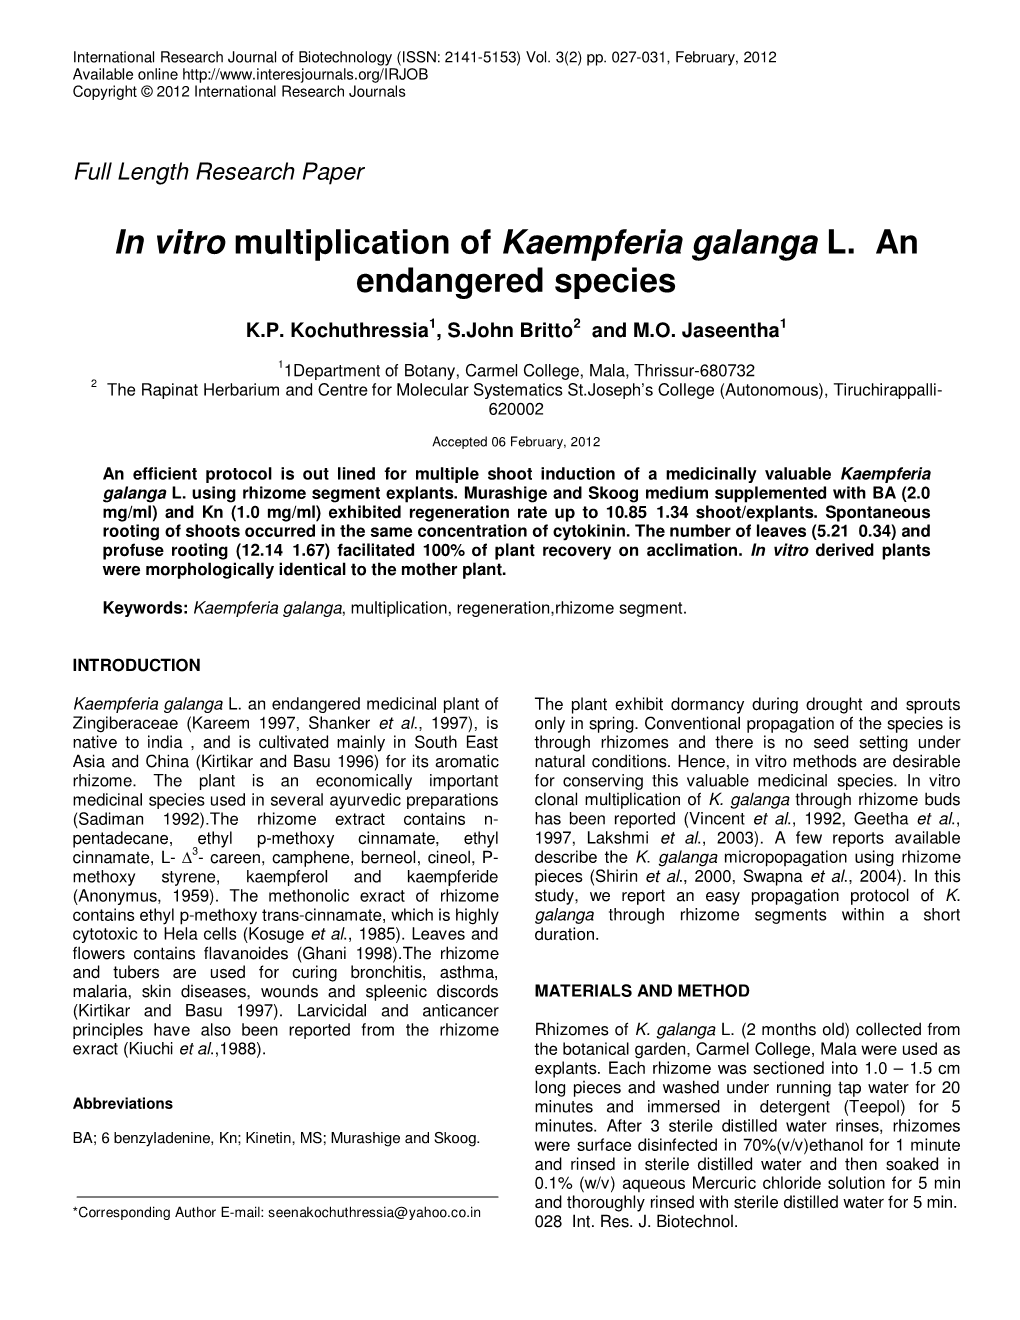 In Vitro Multiplication of Kaempferia Galanga L. an Endangered Species